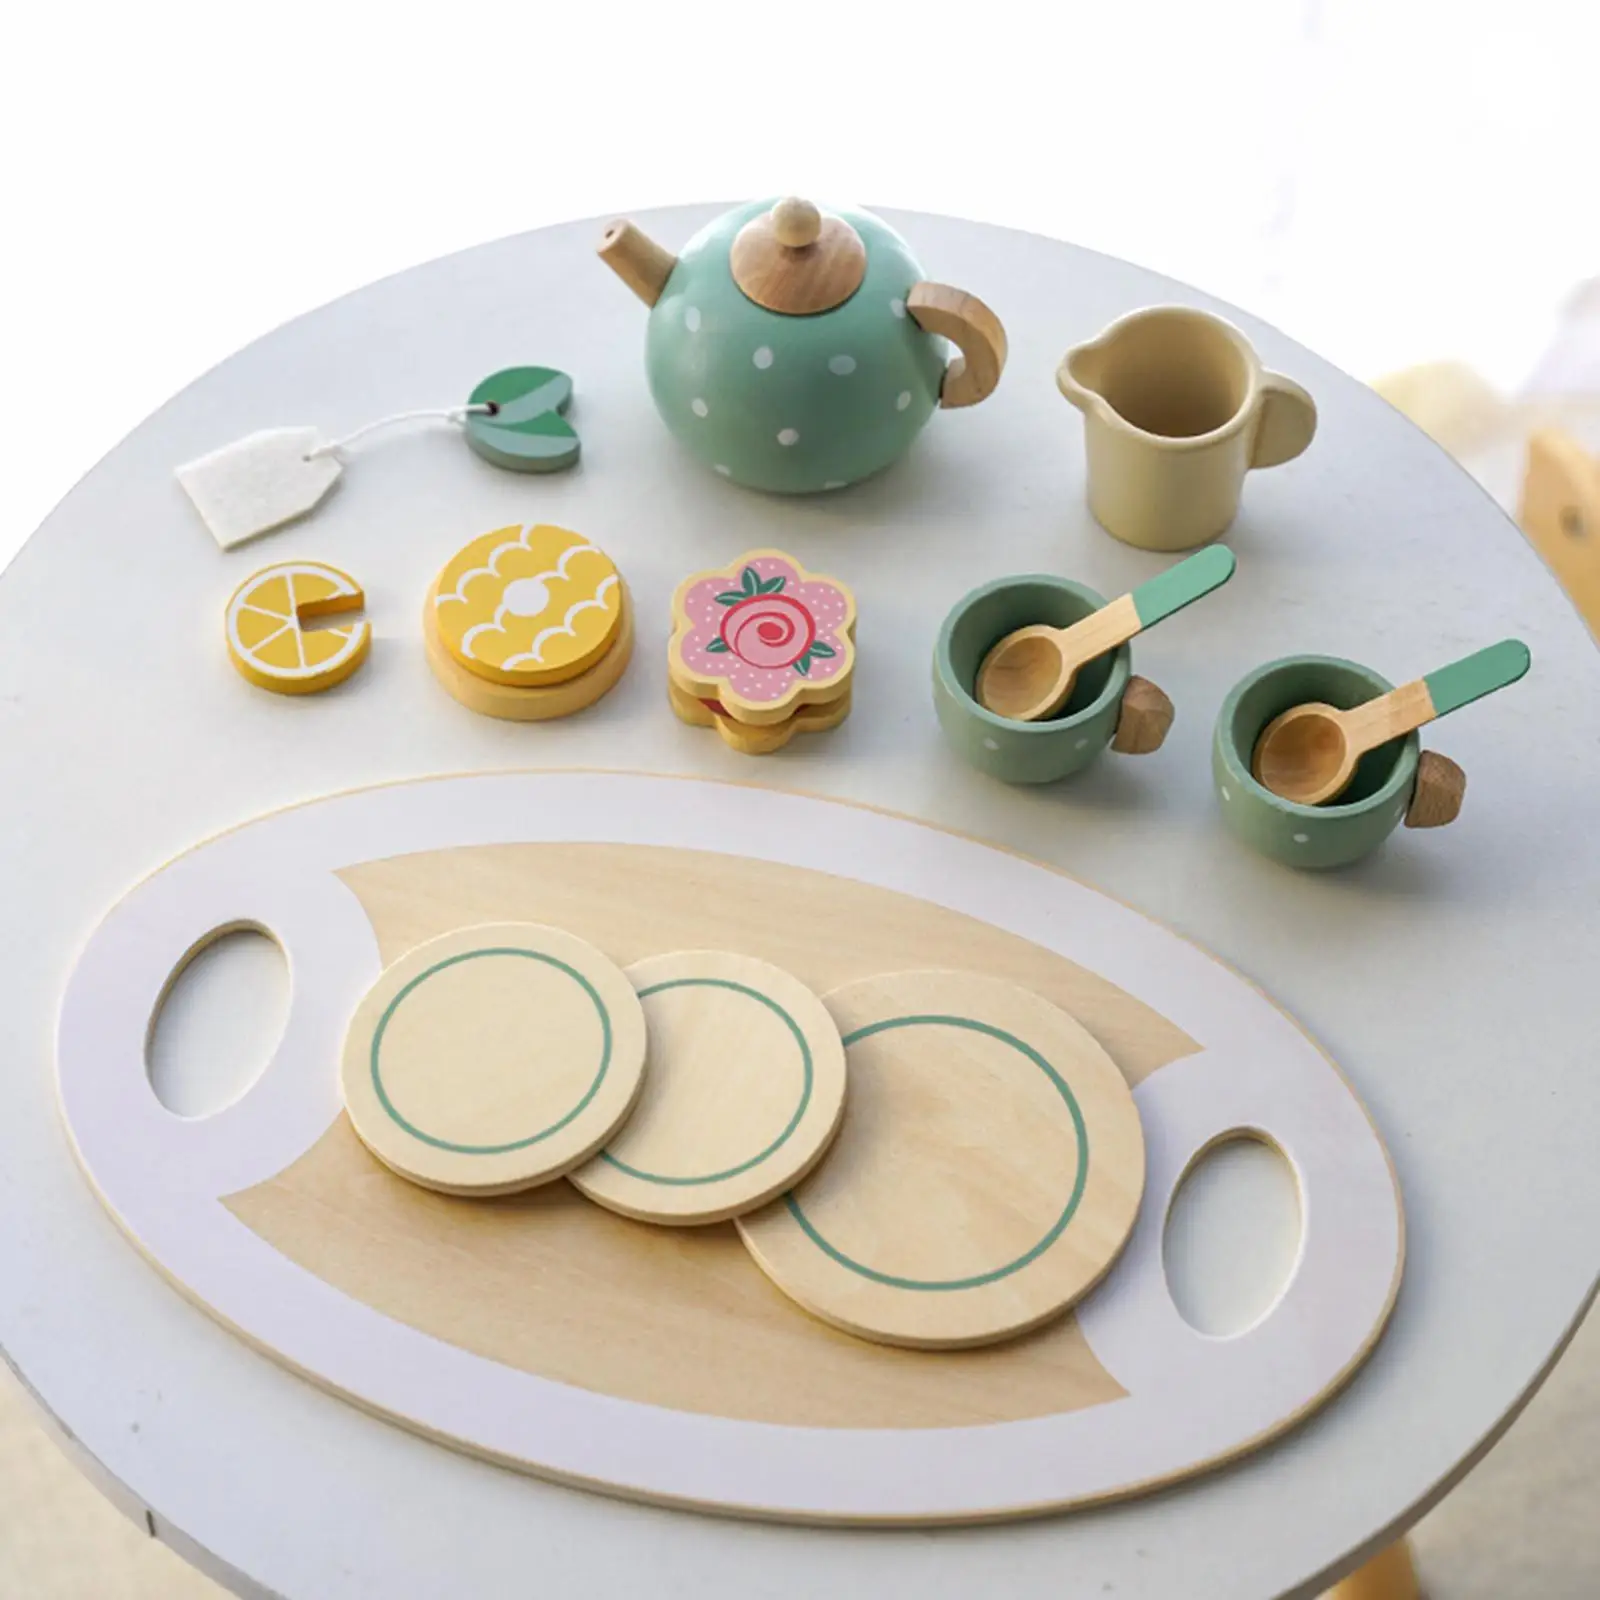 15 Pieces Tea Party Kitchen Playset Wooden Handiccraft Toy for Boy Girl Kids